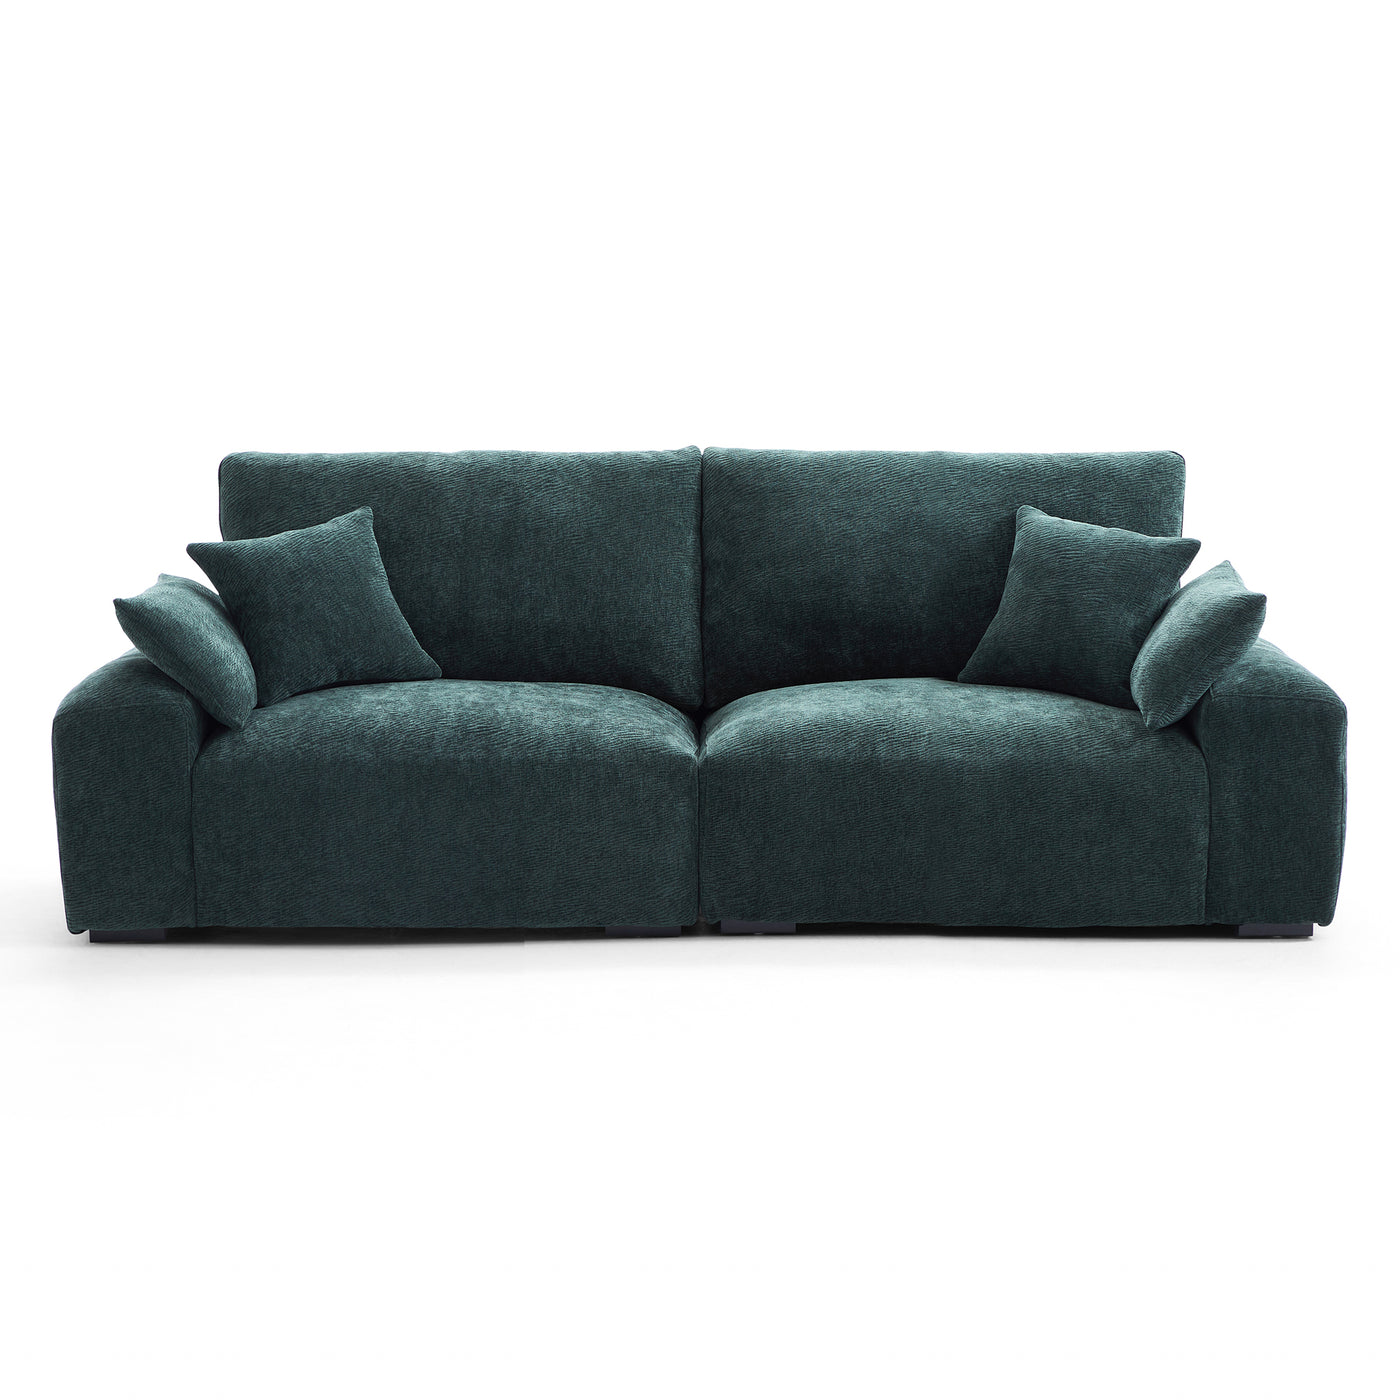 The Empress Green Sofa-hidden